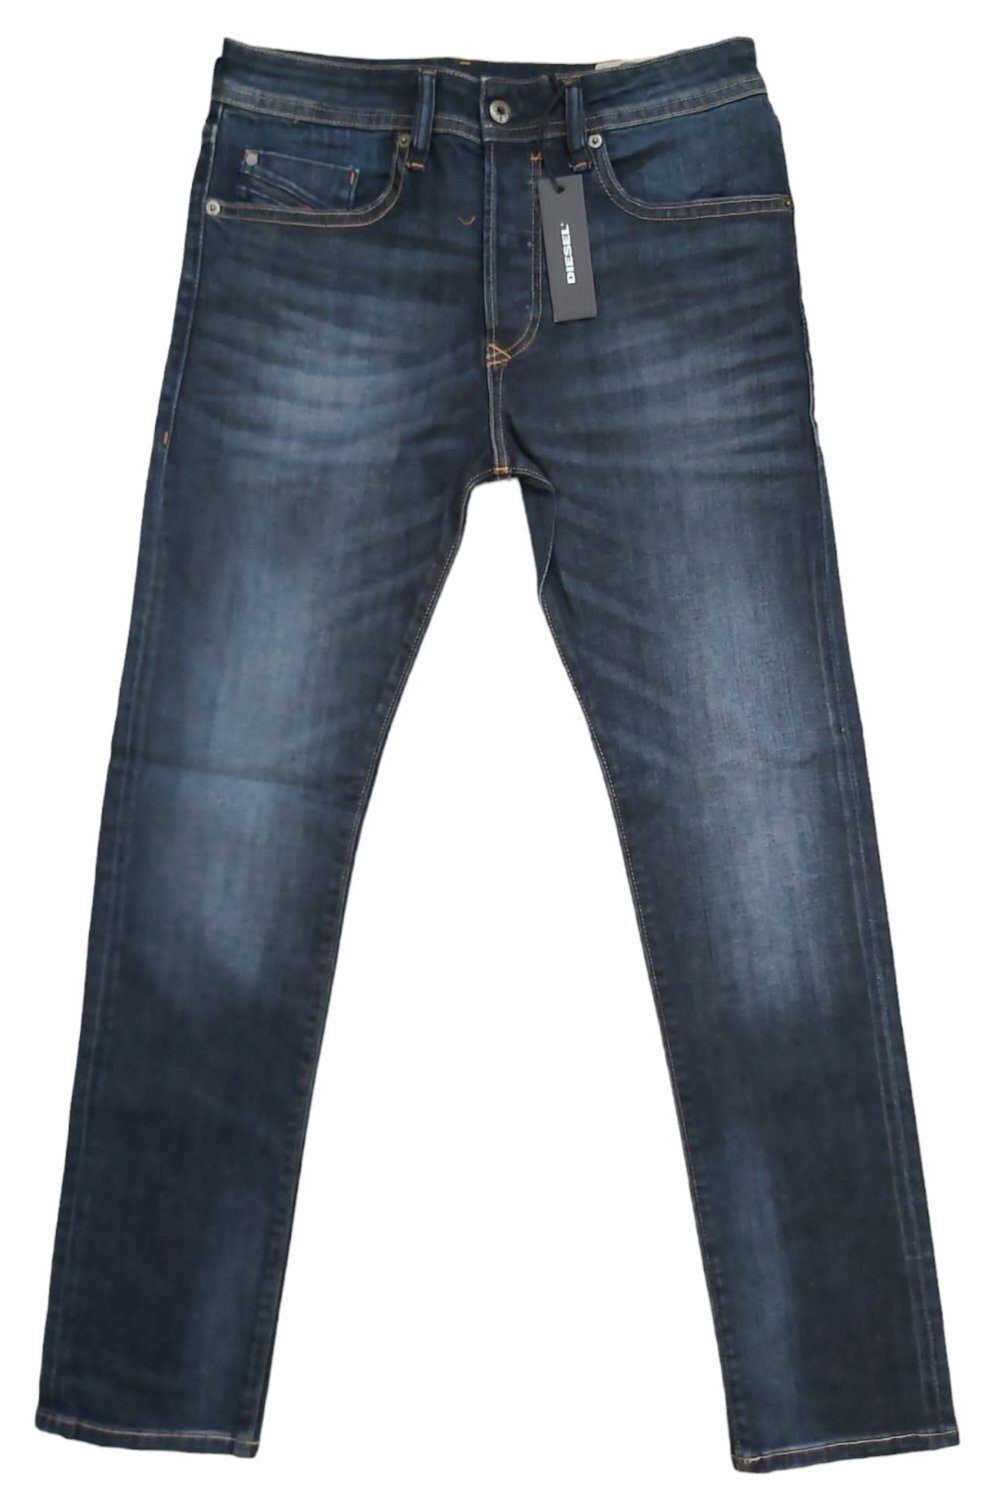 5-Pocket-Style RFE03 Stretch) Diesel (Dunkelblau, Comfort-fit-Jeans Buster